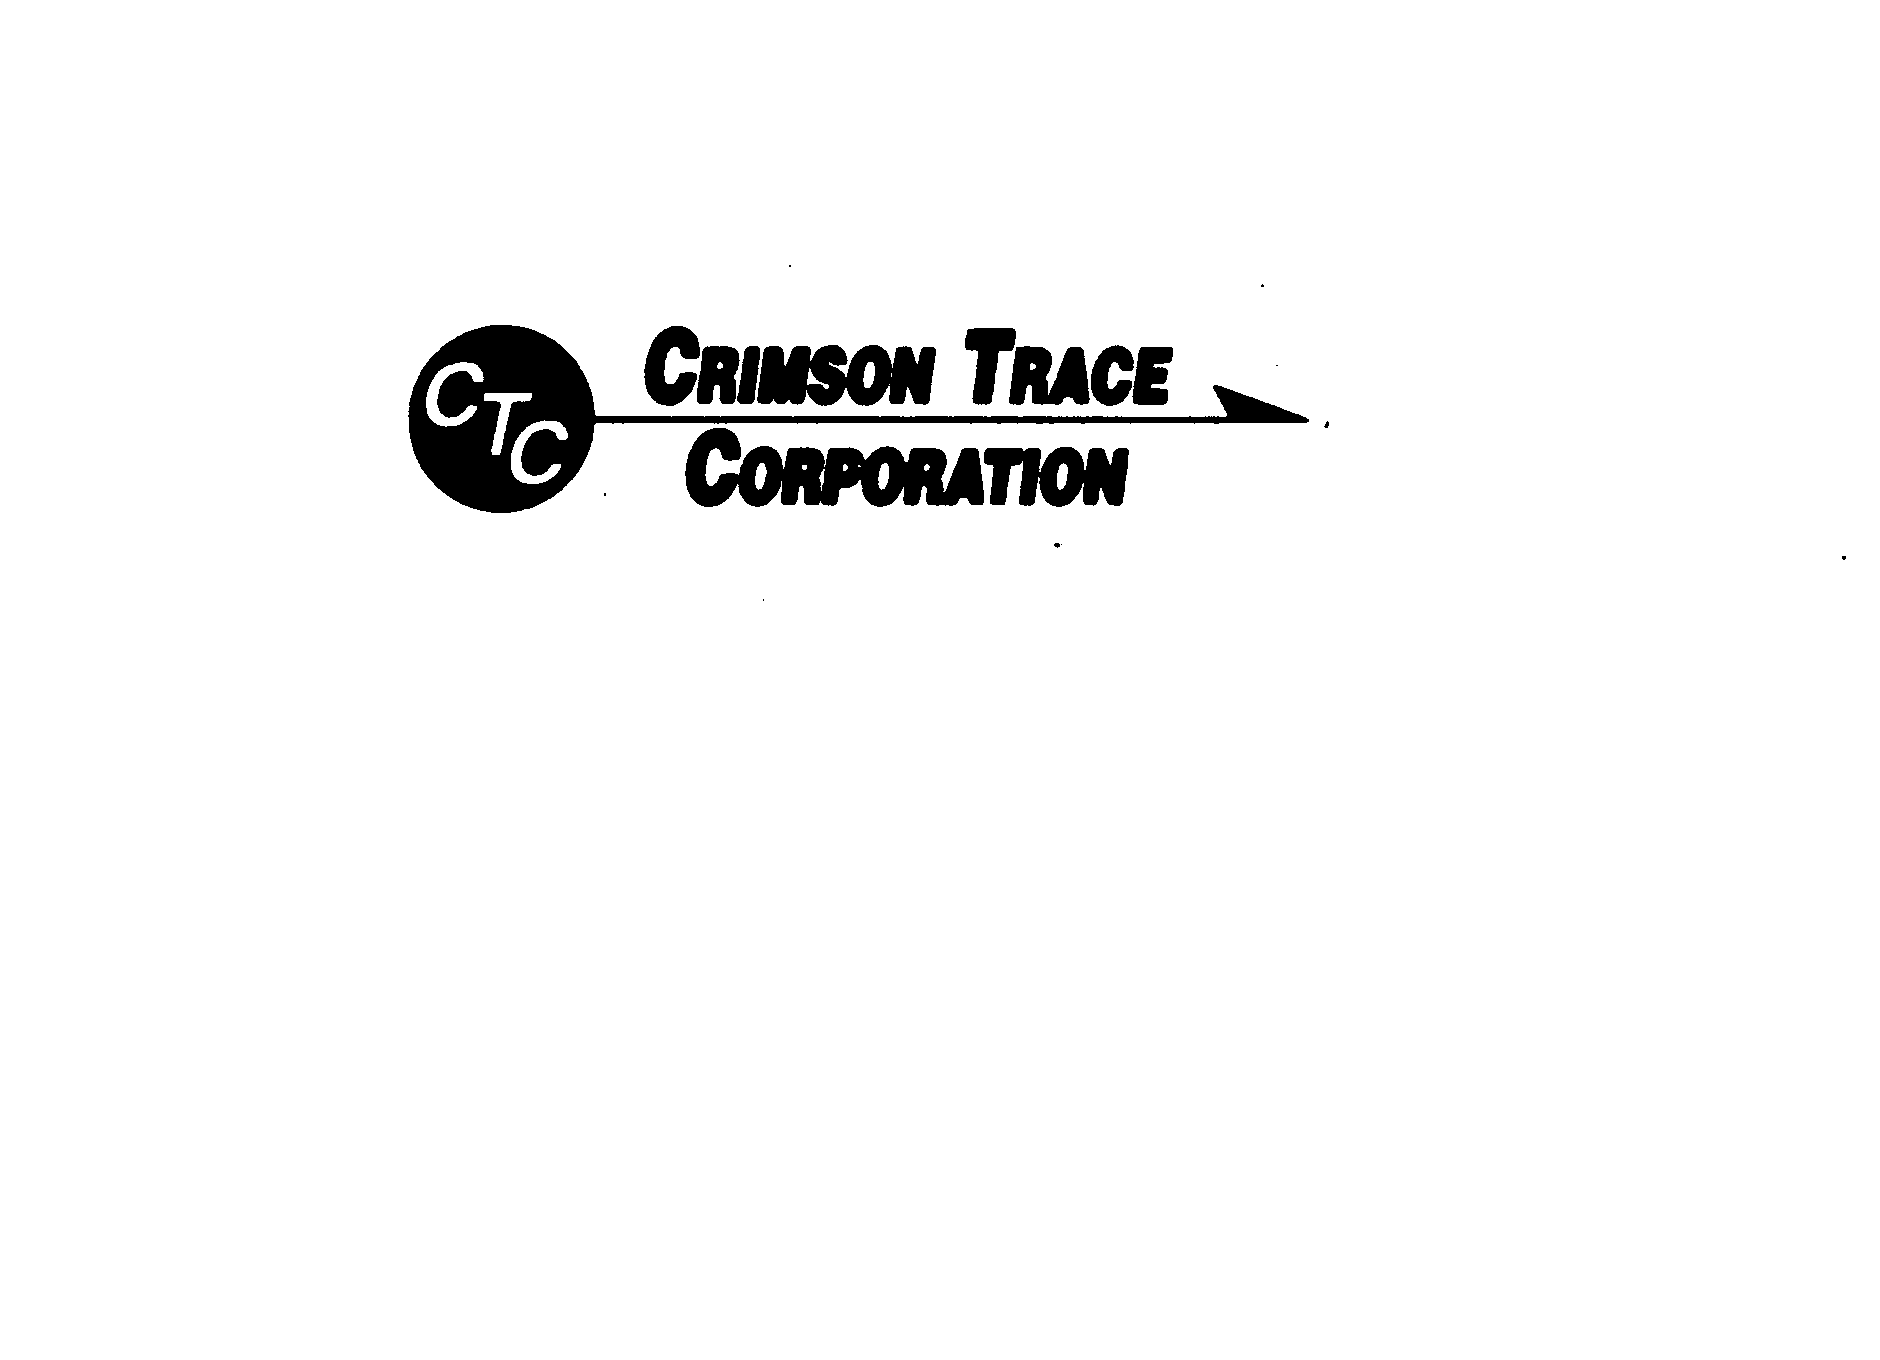  CTC CRIMSON TRACE CORPORATION